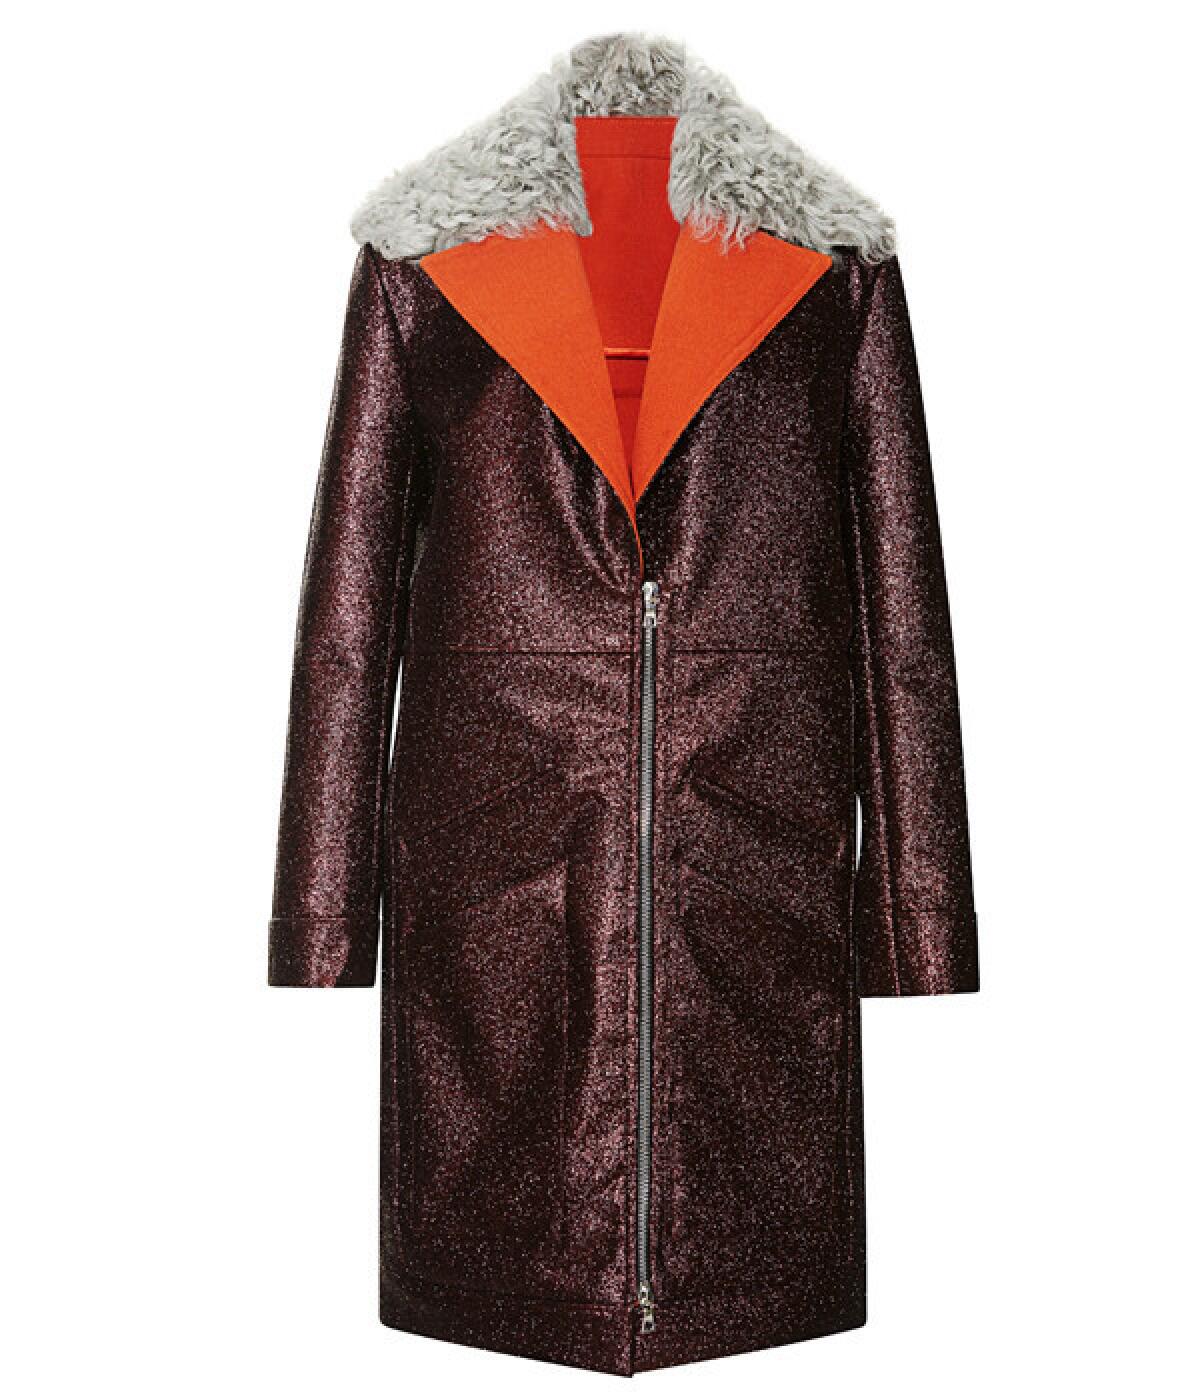 Rodarte glitter coat with shearling collar.